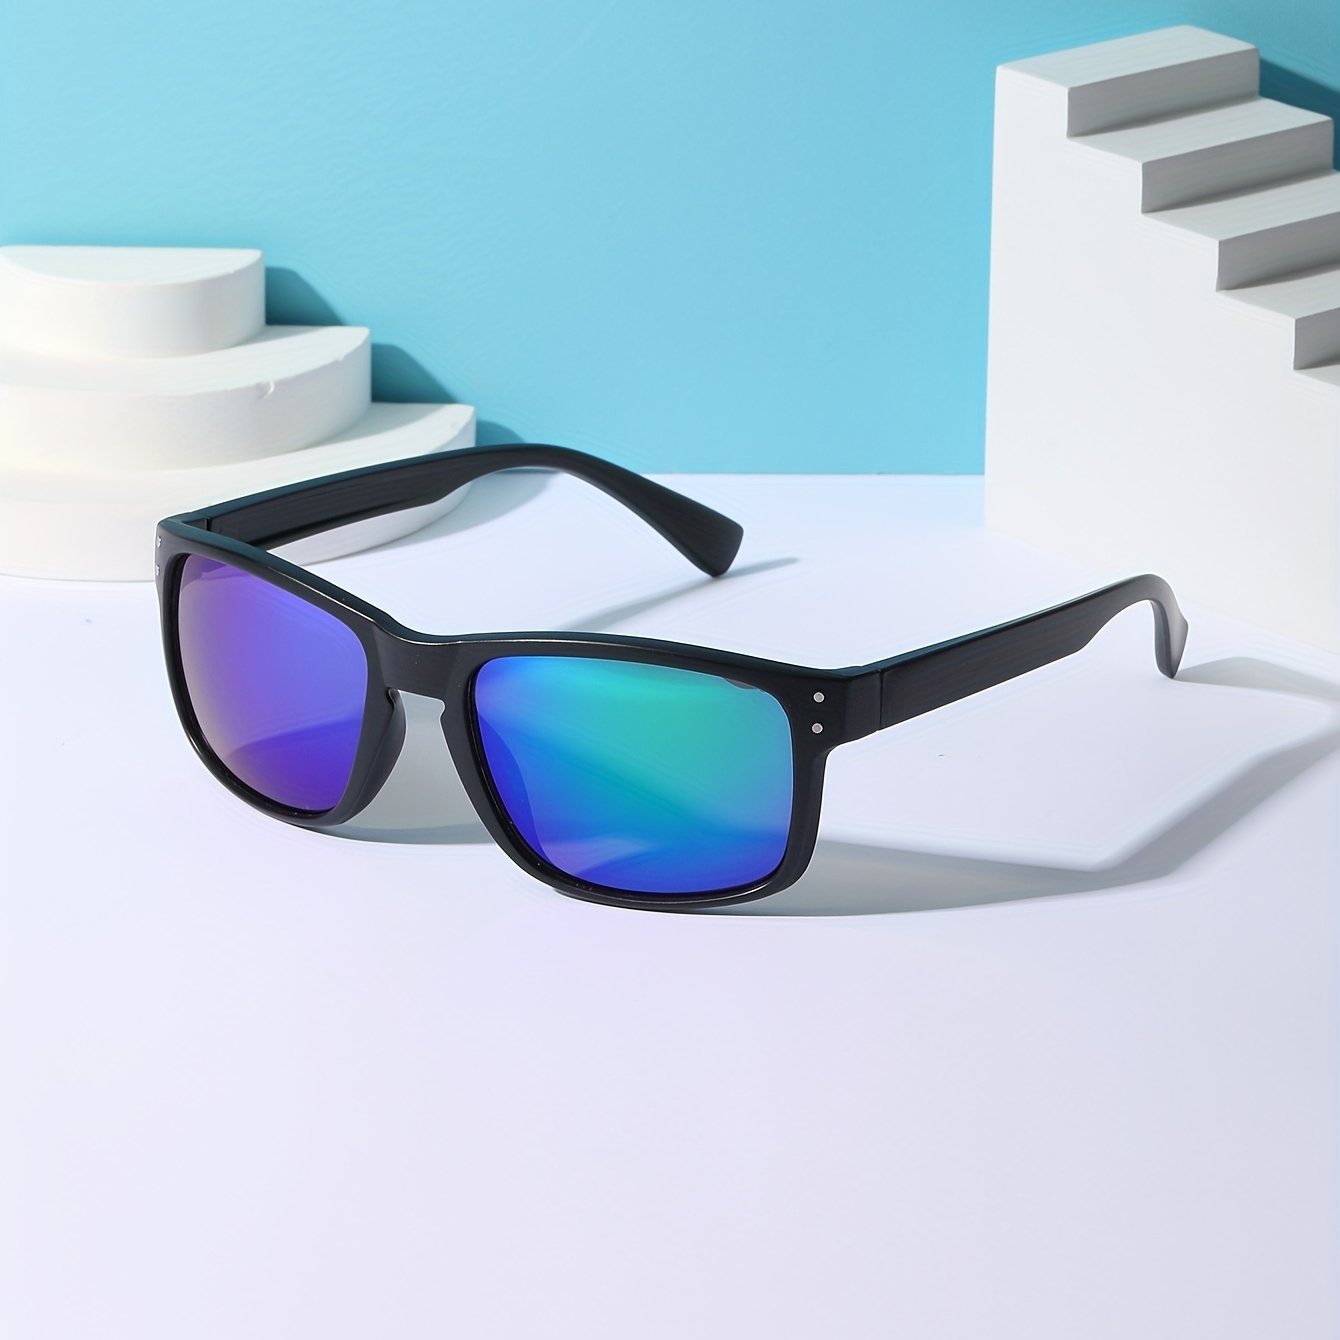 1pc Men's Black Frame Coating Blue Lenses Colorful Men's Driving Sunglasses